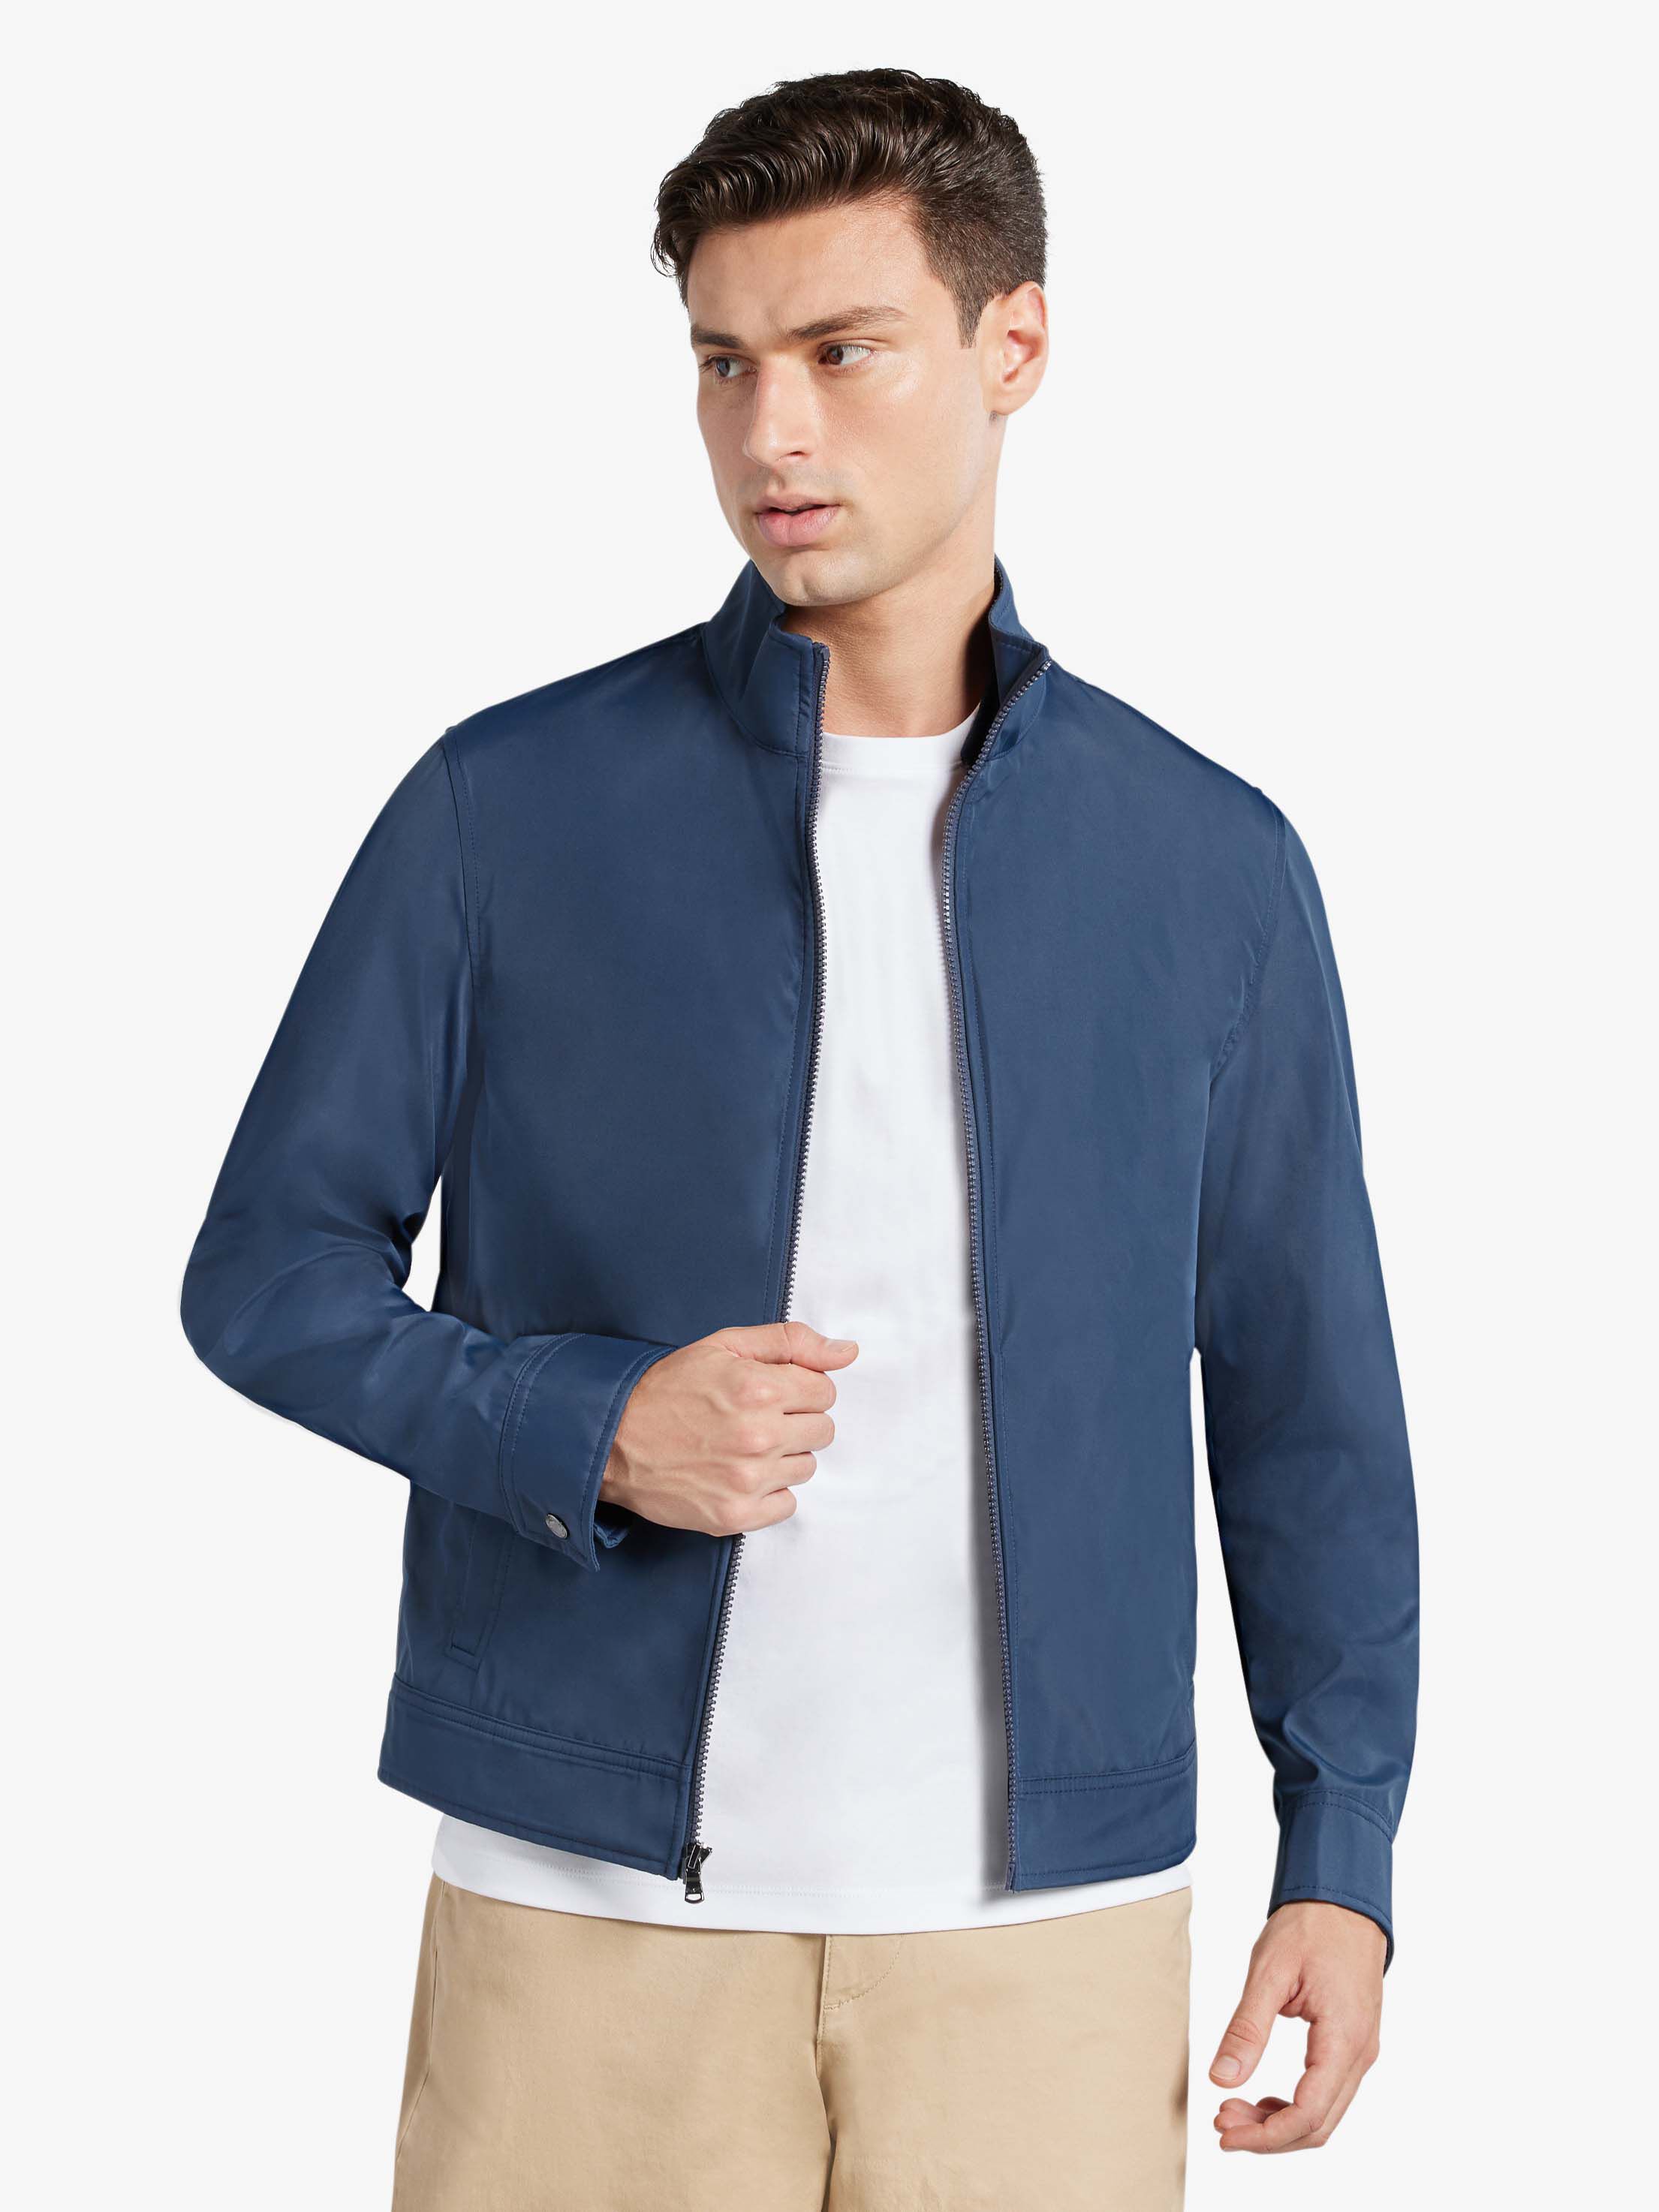 Men's Designer Jackets | Michael Kors Official